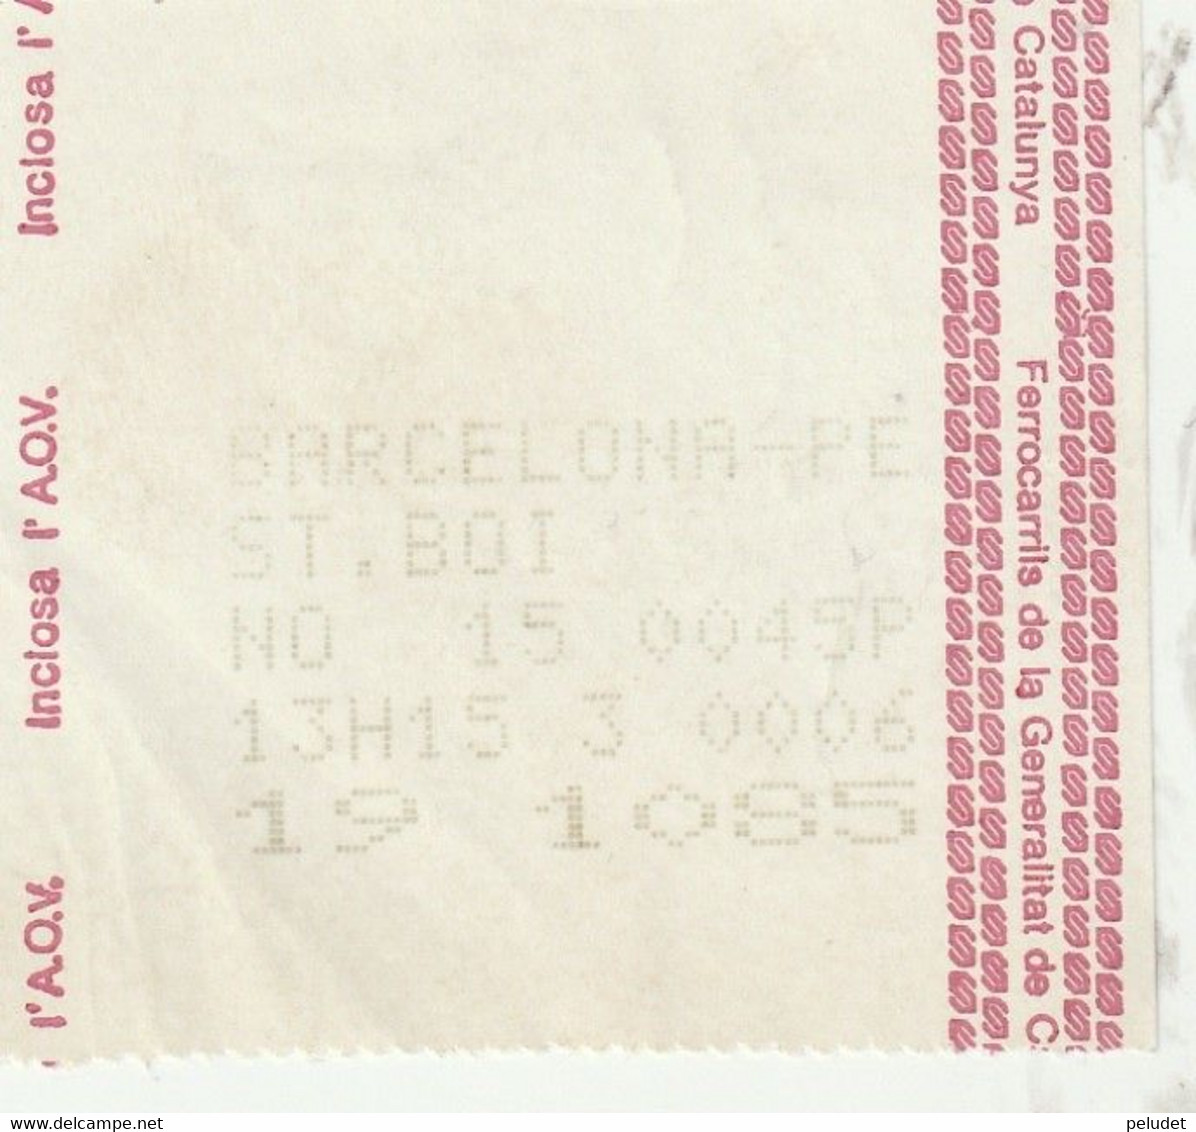 FGC - BARCELONA - ST BOI - 1985 - Europa